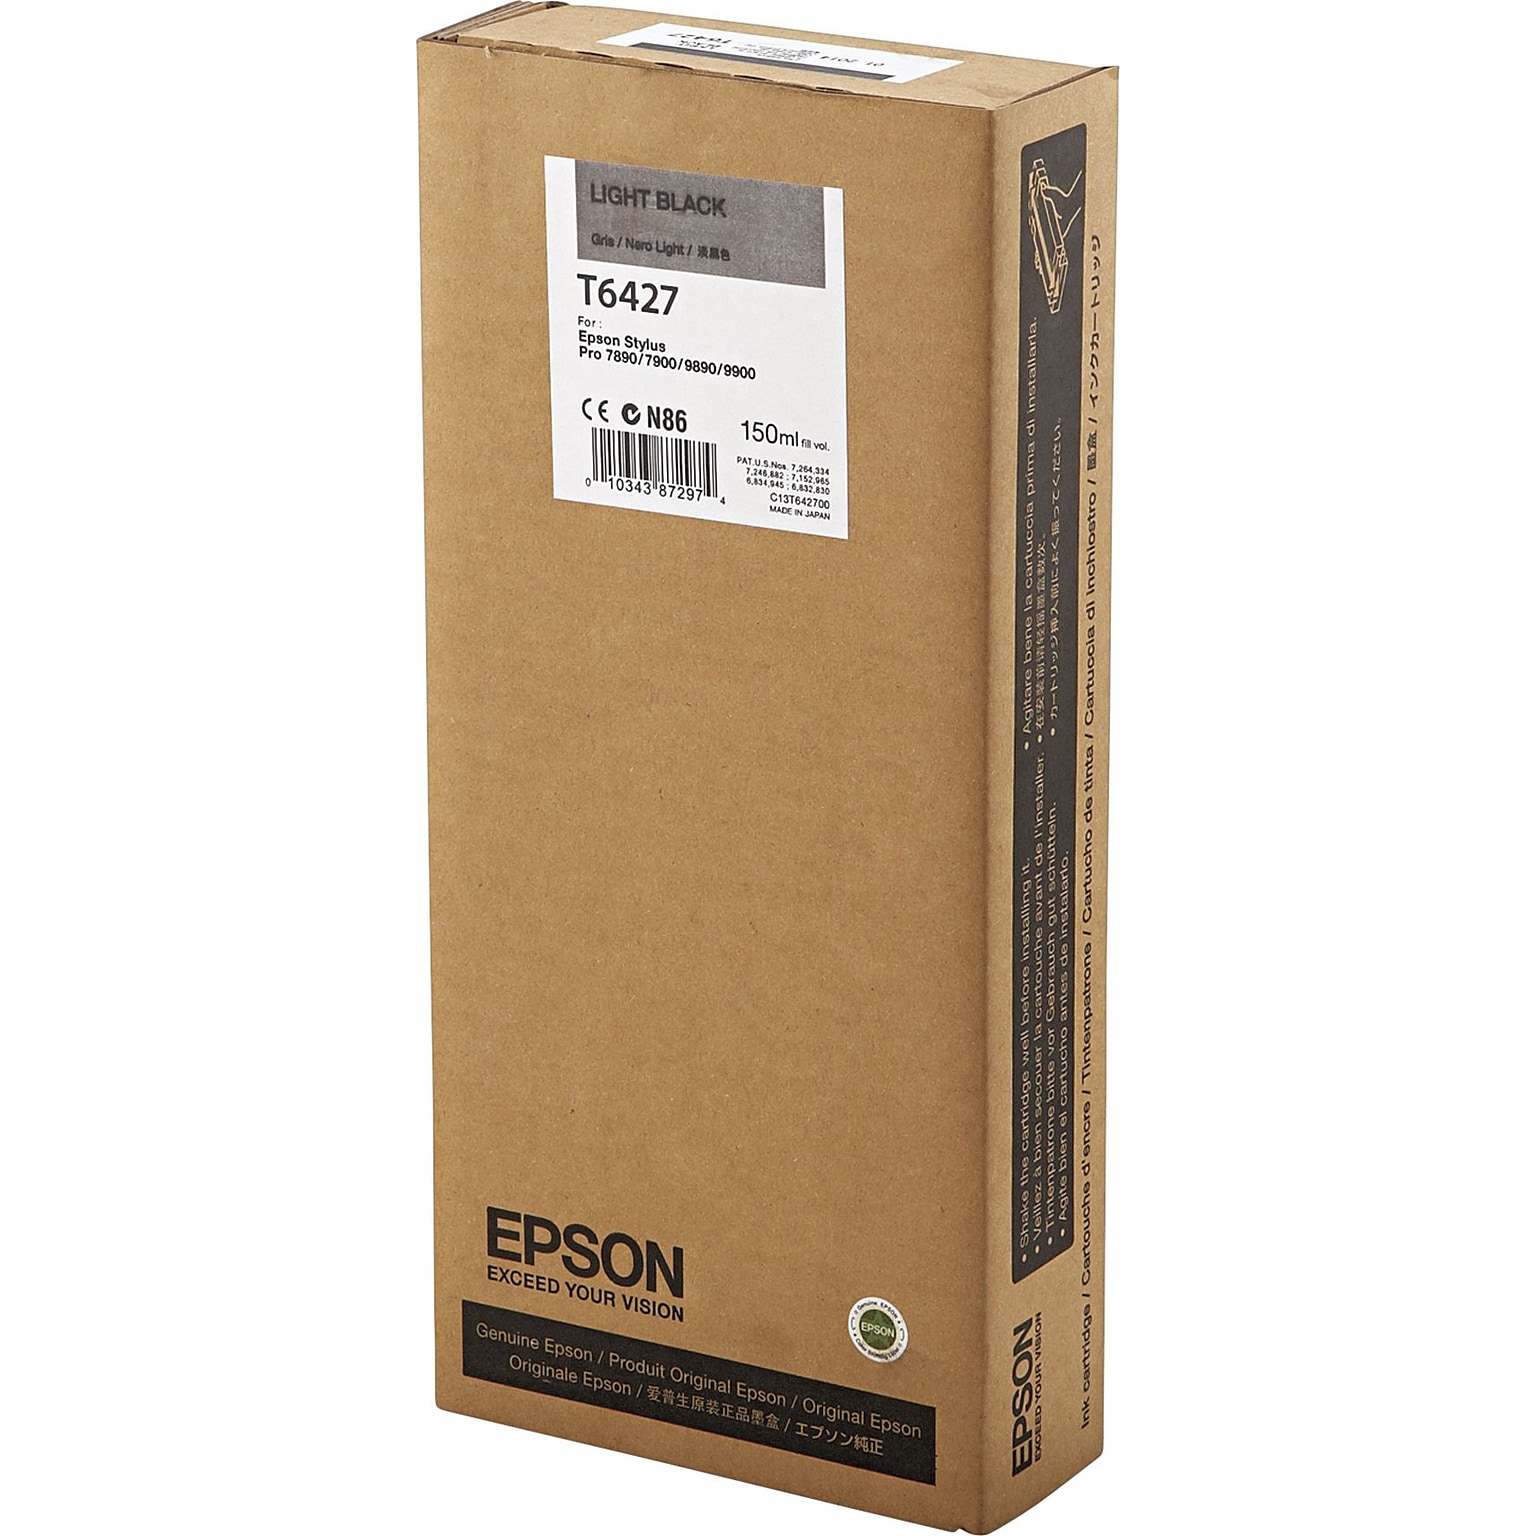 Epson T642 Light Black Standard Yield Ink Cartridge